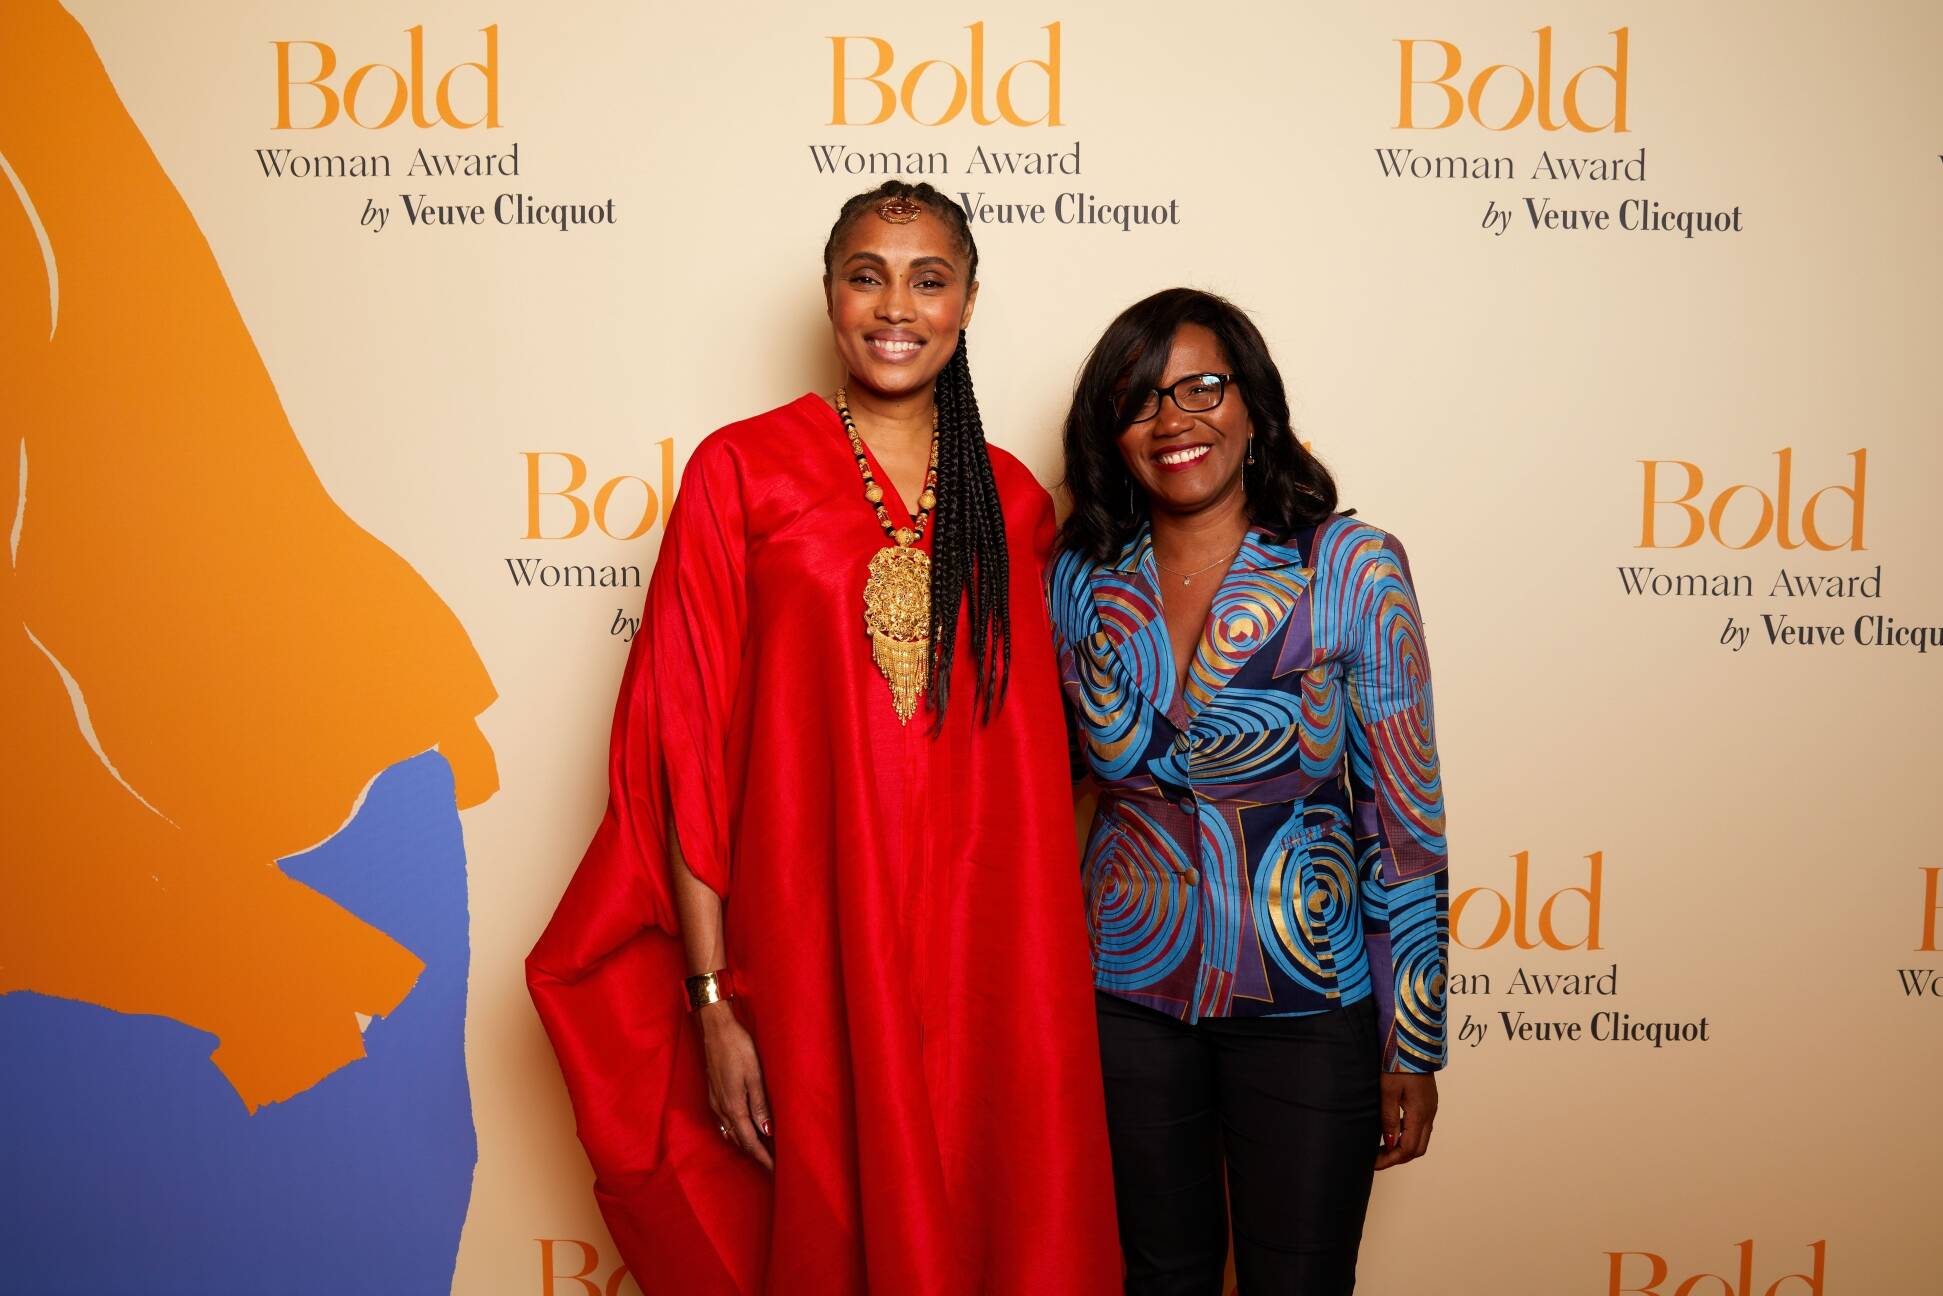 Celebrating 50 years of Veuve Clicquot's Bold Women awards